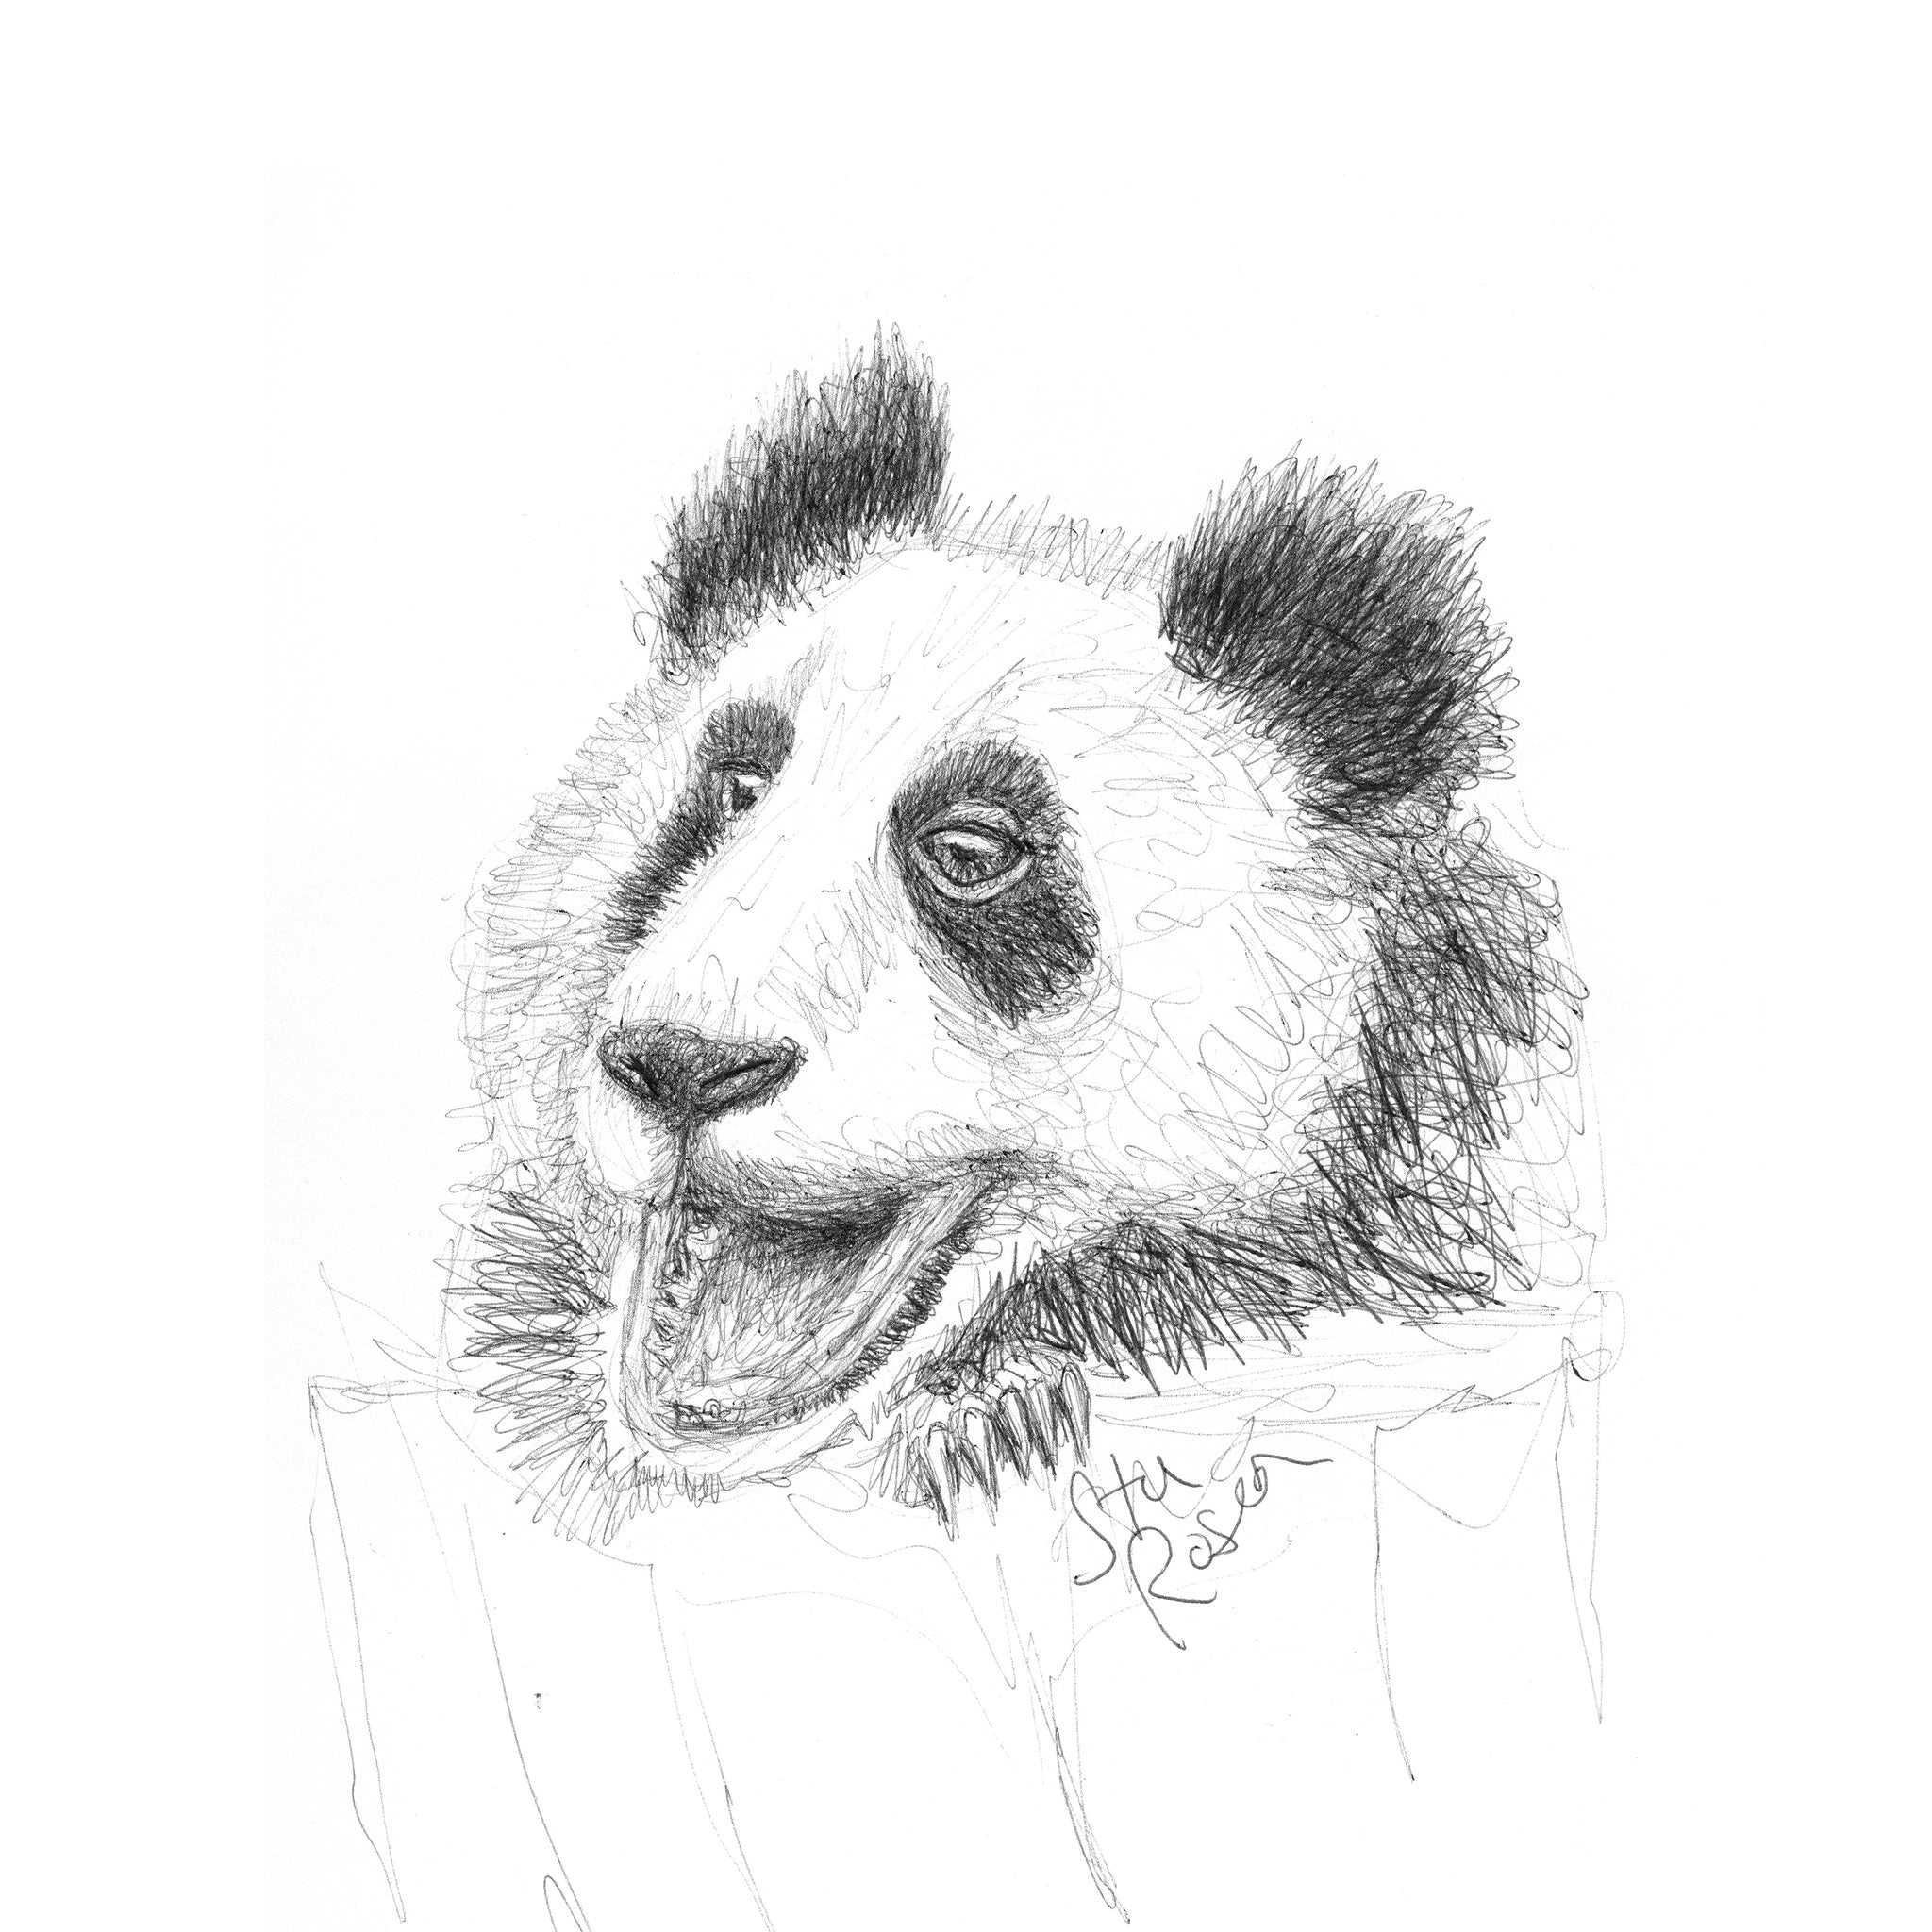 Panda - "Anticipation"